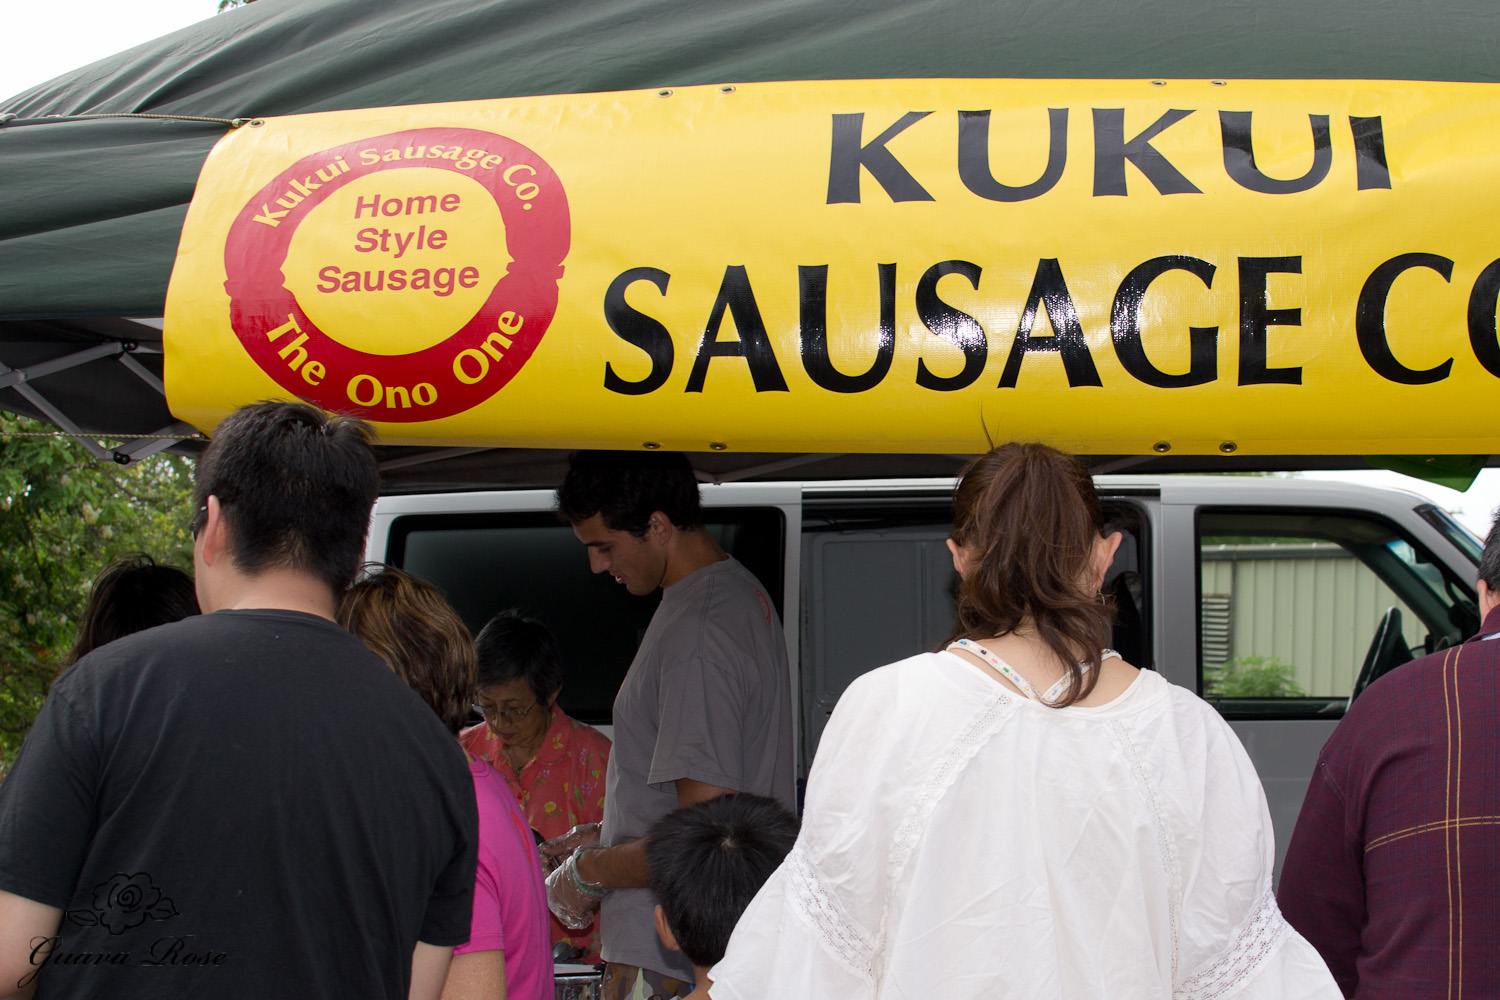 Kukui Sausage Line